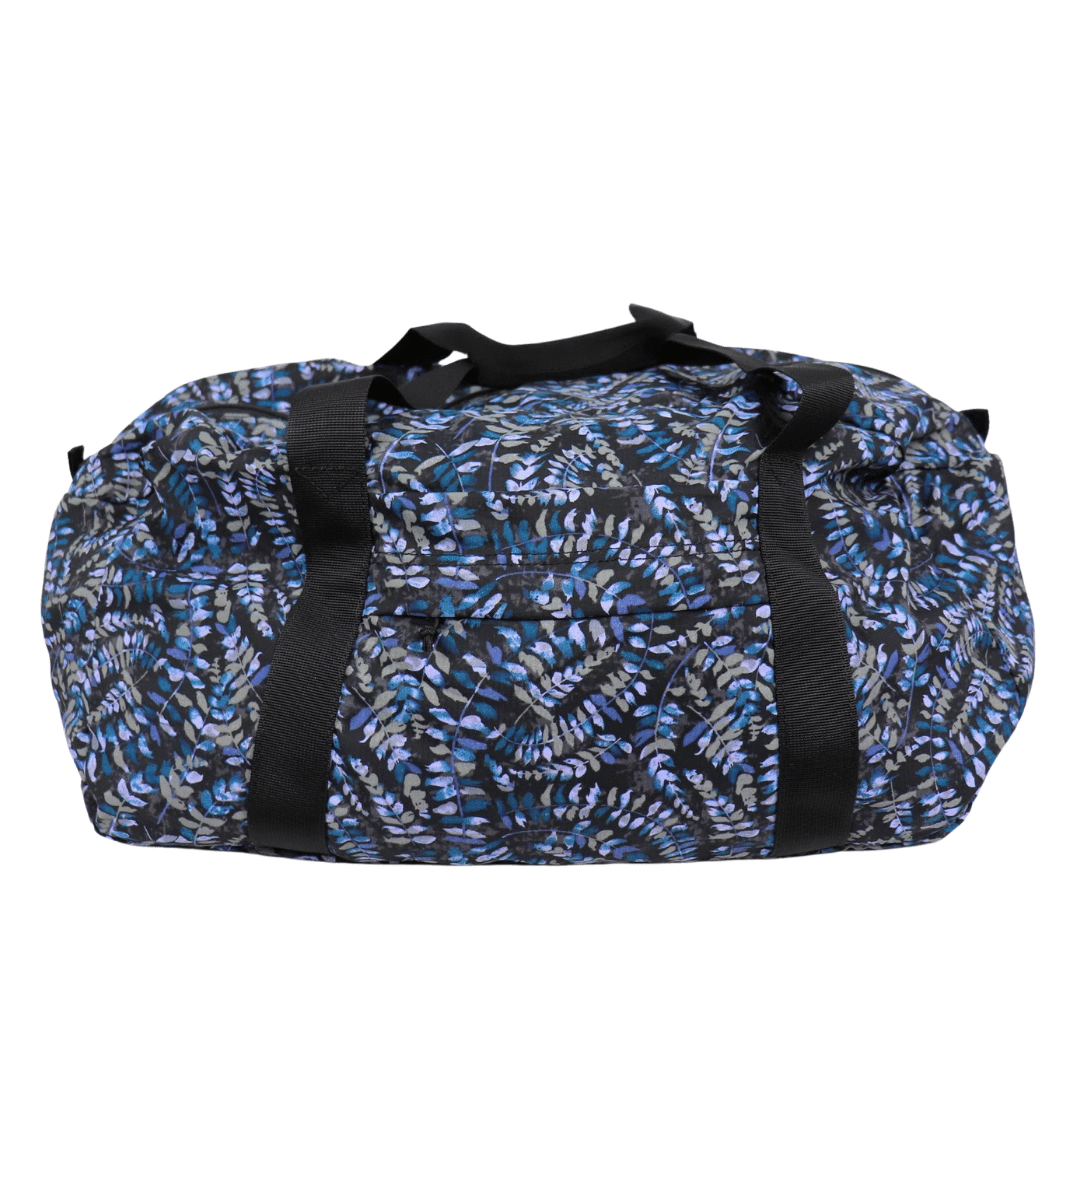 The Packable Duffel Bag